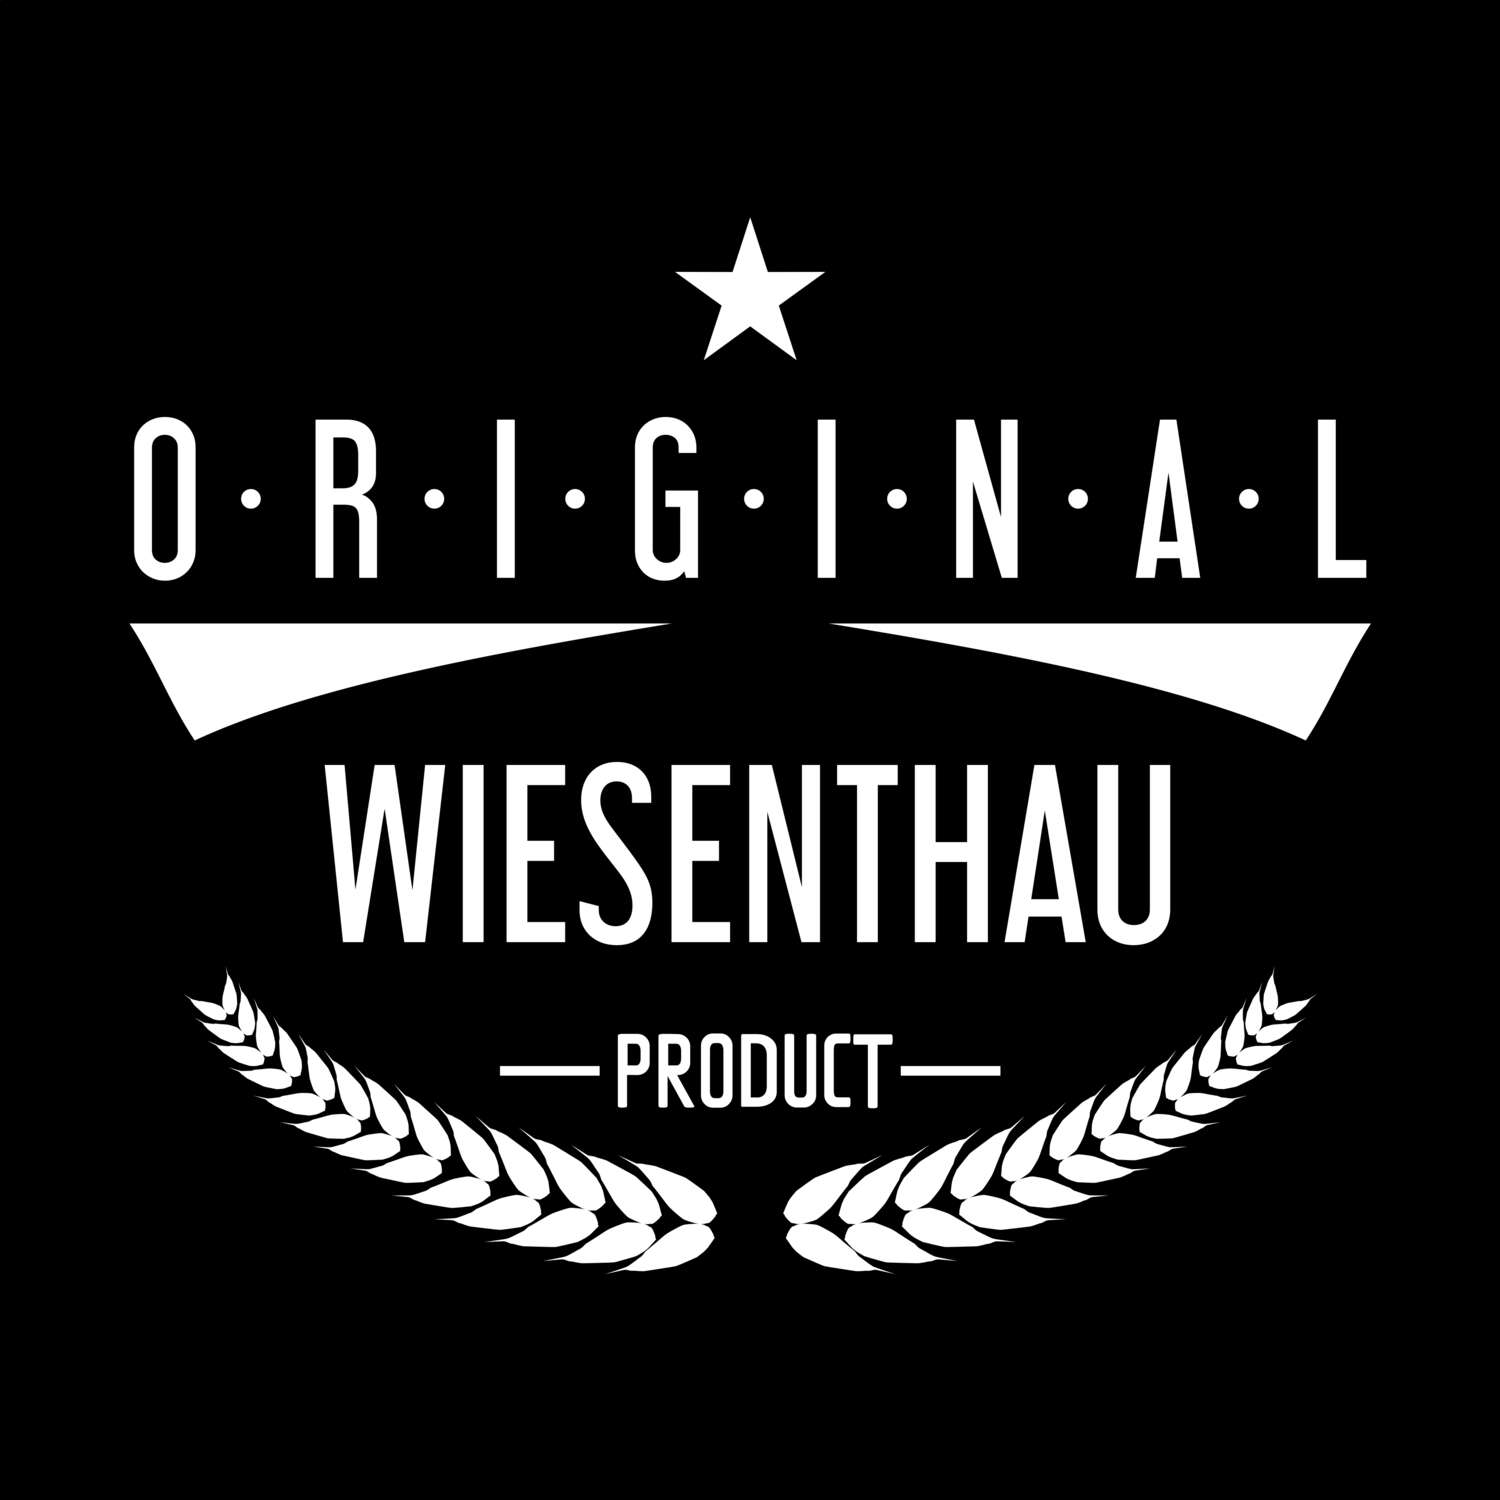 Wiesenthau T-Shirt »Original Product«